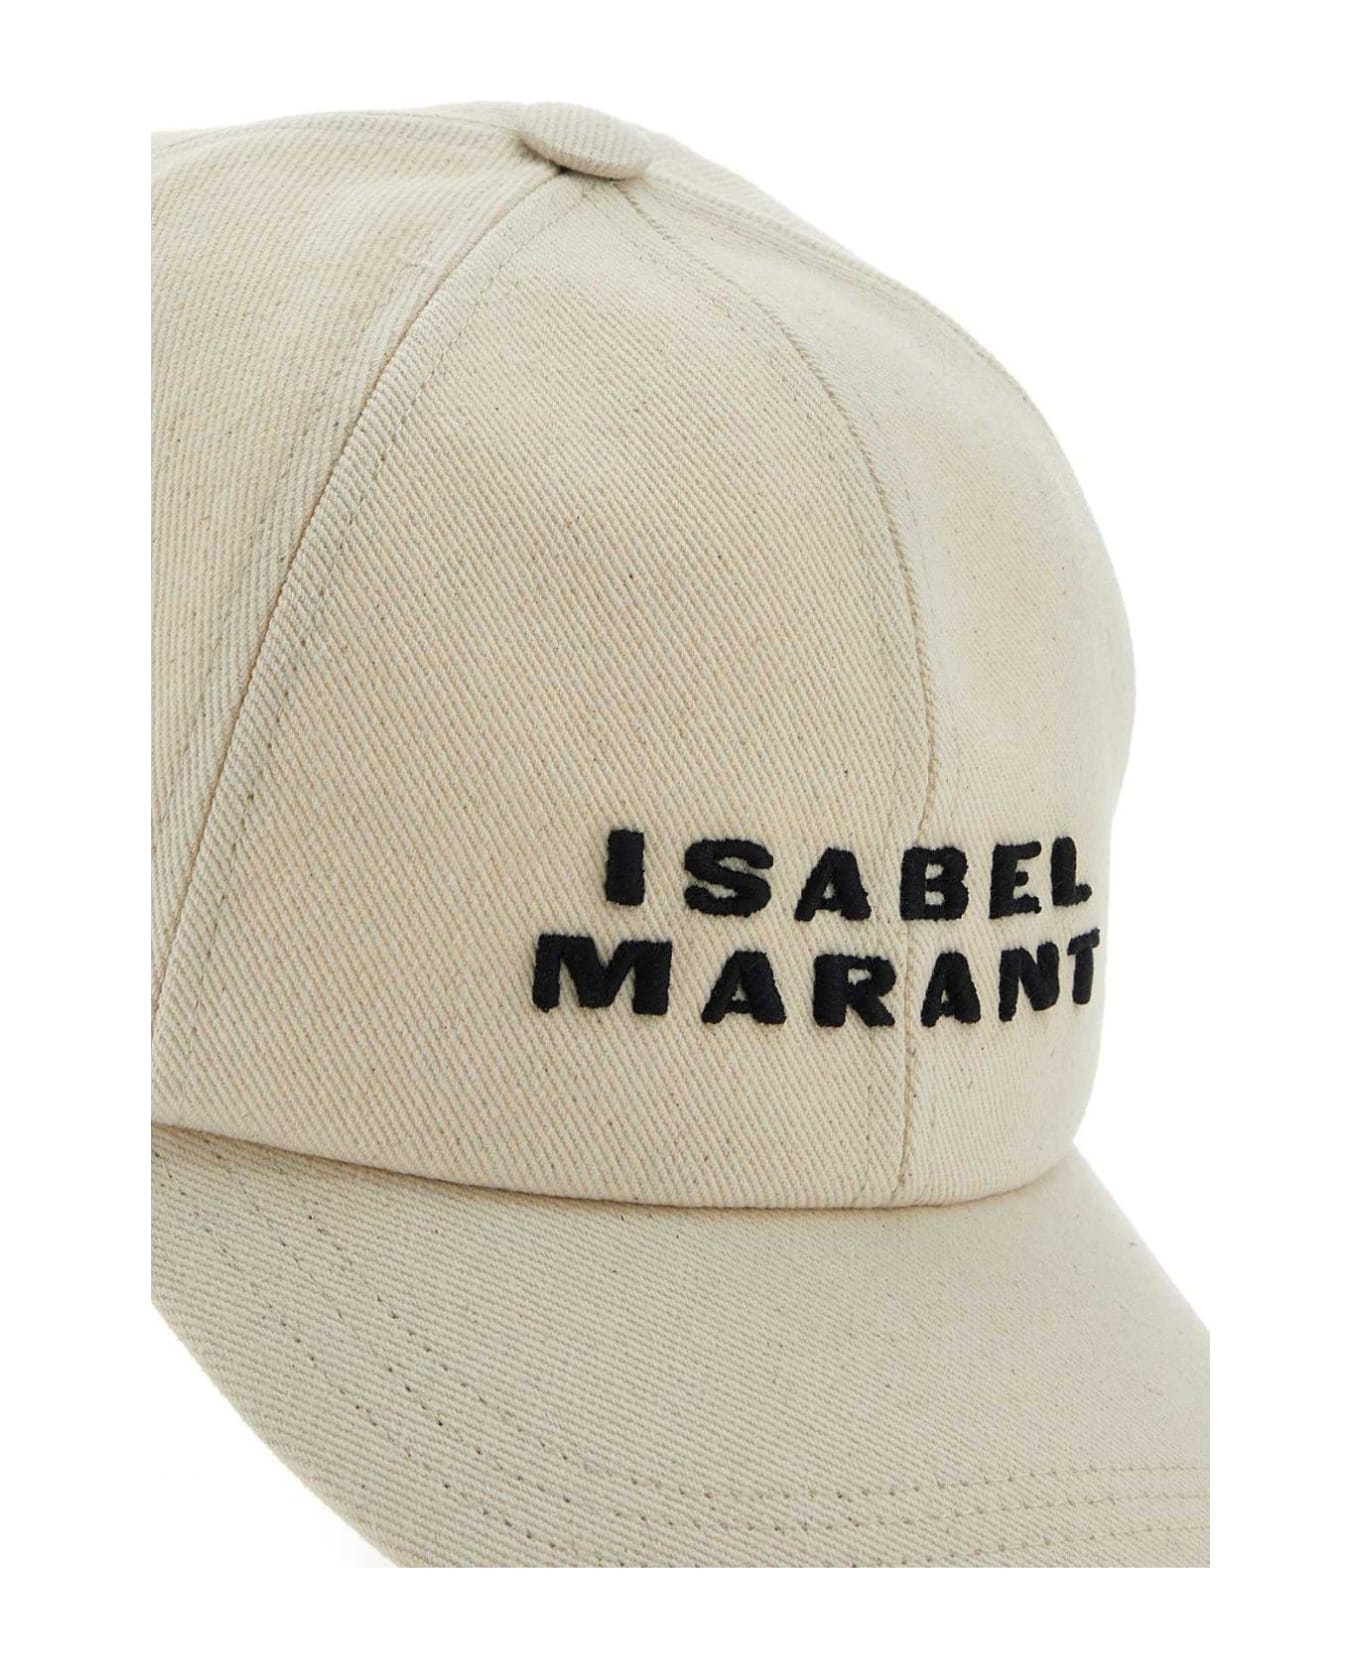 Isabel Marant Baseball Cap - Ecbk Ecru Black